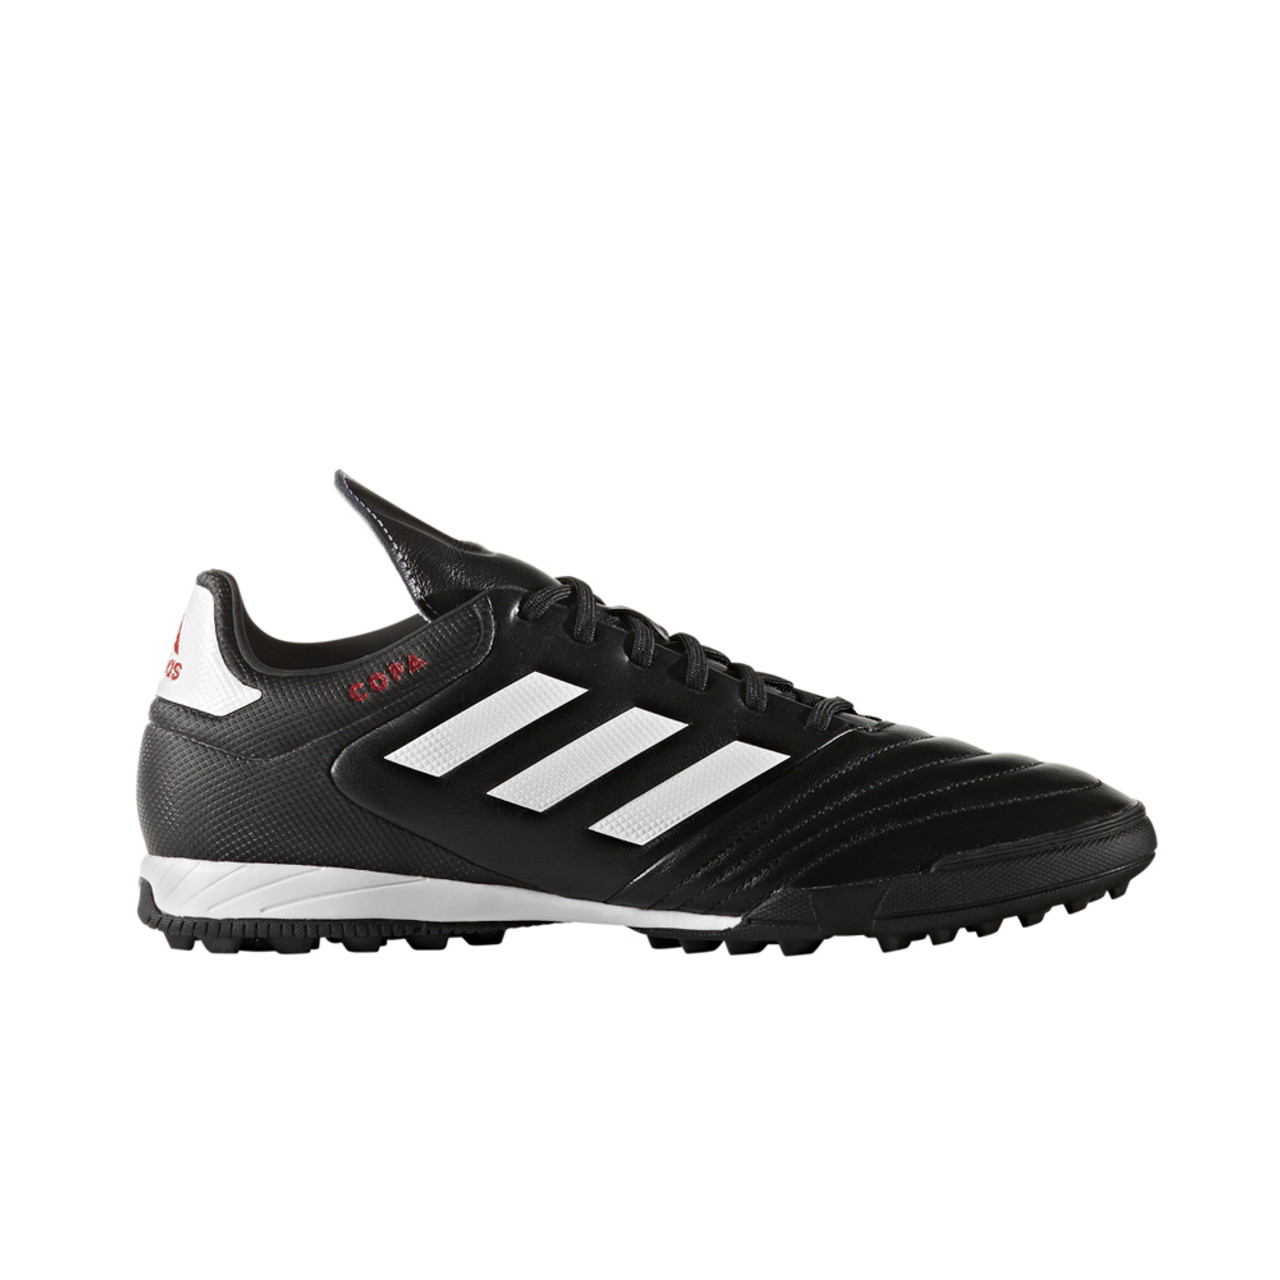 Adidas Men's Copa 17.3 TF Soccer Shoe - Black | Discount Adidas Athletic Shoes & More - Shoolu.com | Shoolu.com